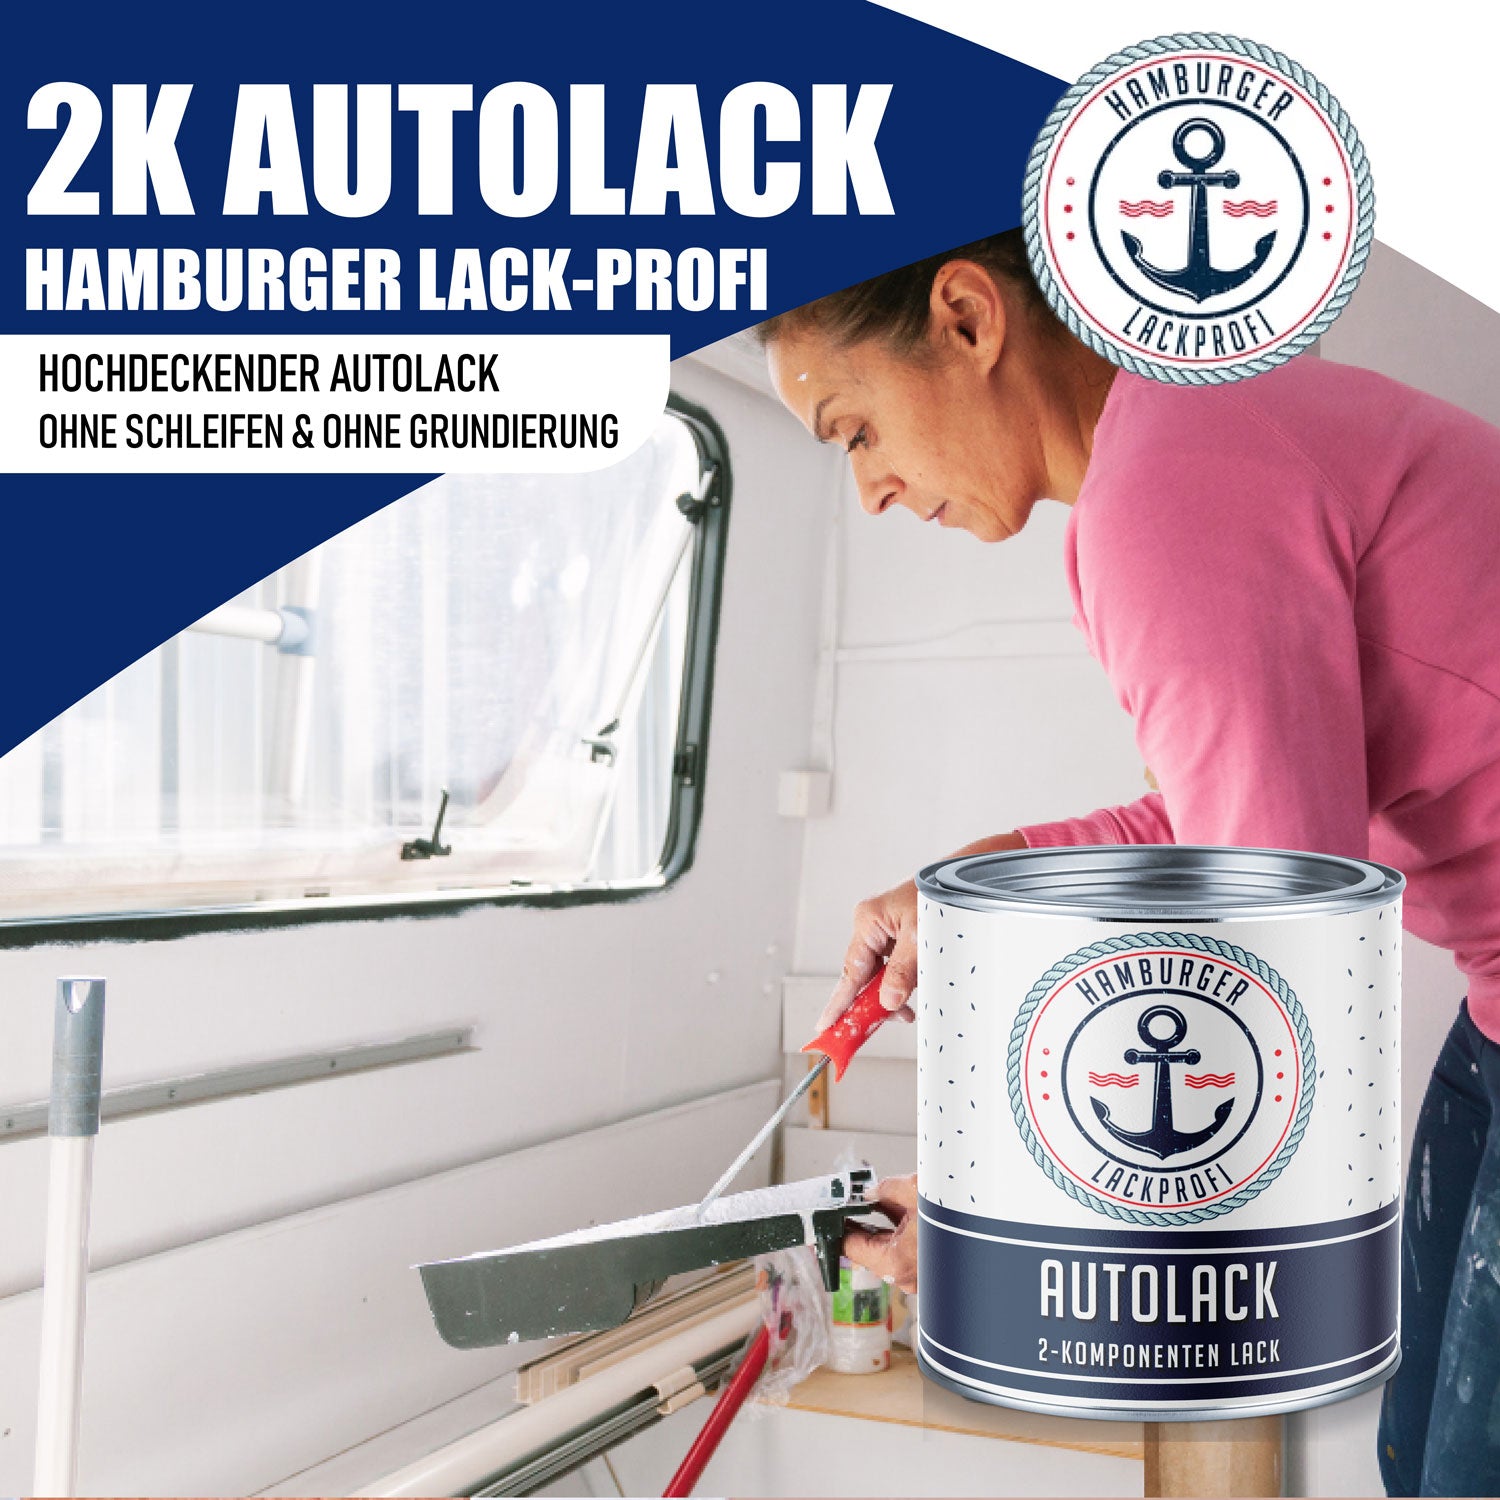 Hamburger Lack-Profi 2K Autolack in Hellrosa RAL 3015 mit Lackierset (X300) & Verdünnung (1 L) - 30% Sparangebot